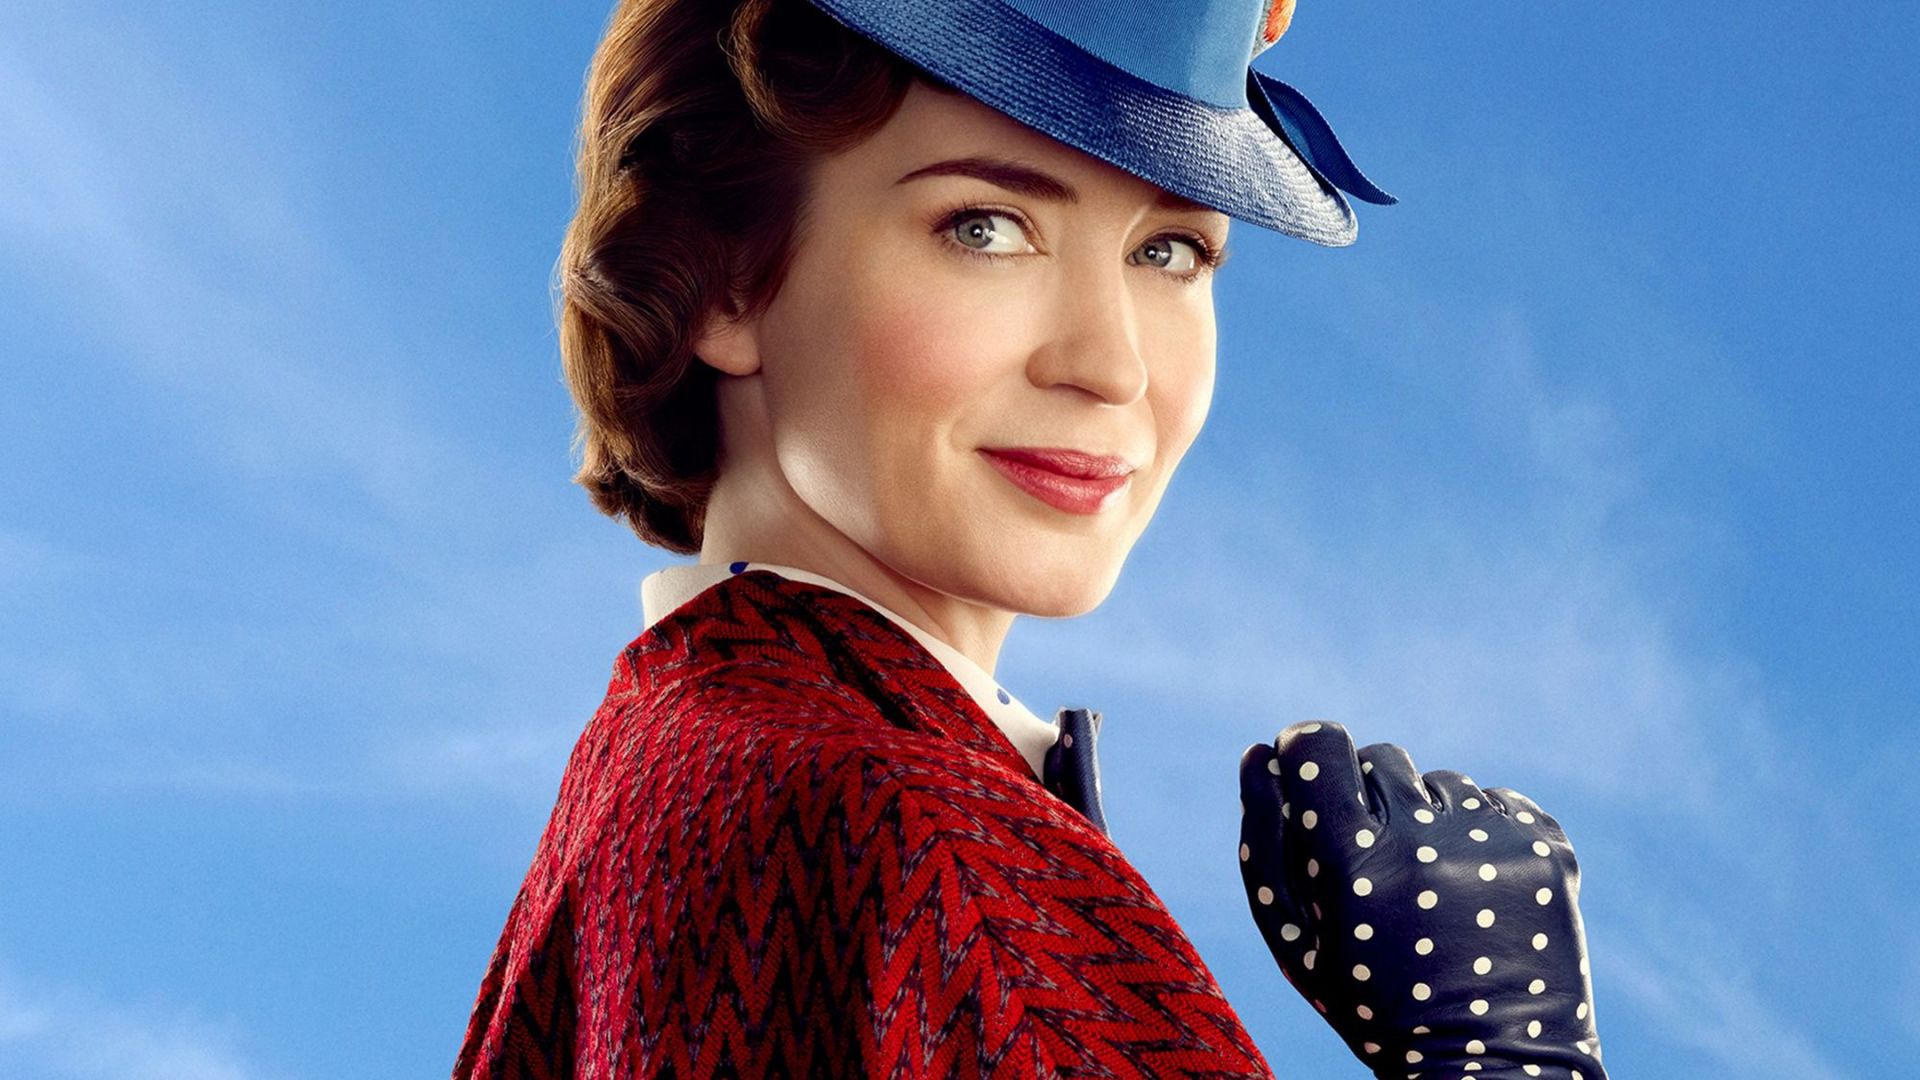 Мэри Поппинс возвращается, Mary Poppins Returns, Emily Blunt, poster (horizontal)